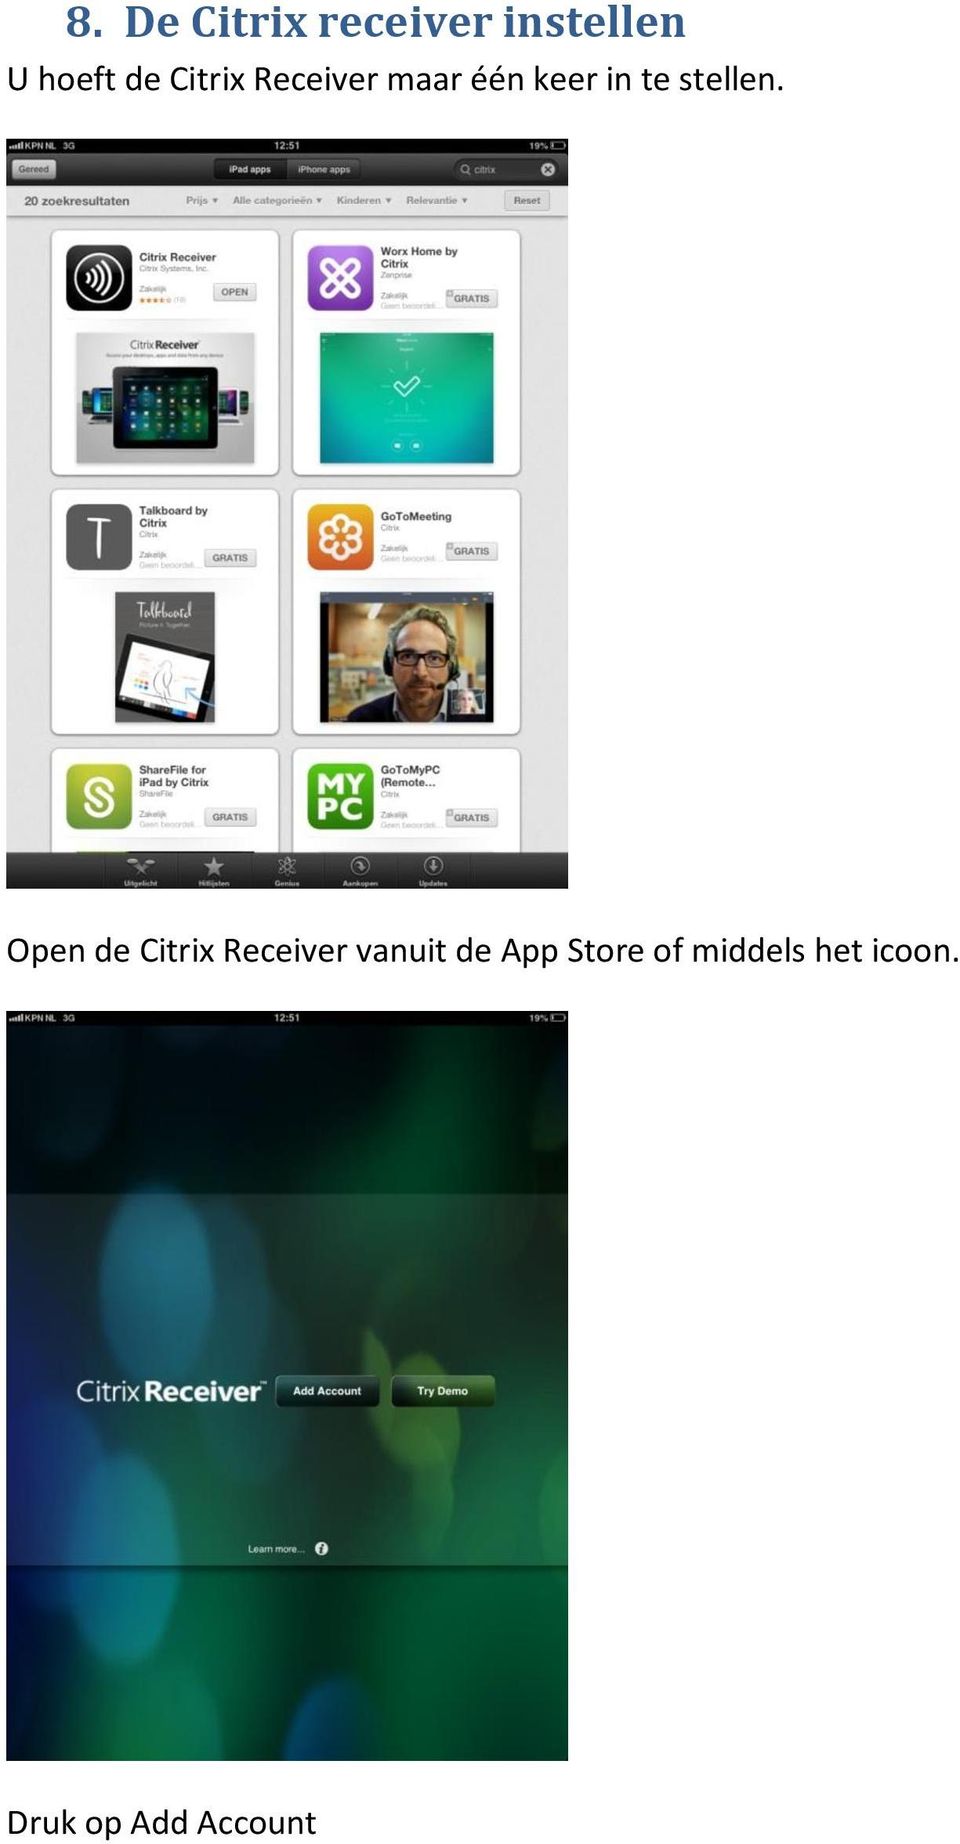 Open de Citrix Receiver vanuit de App Store